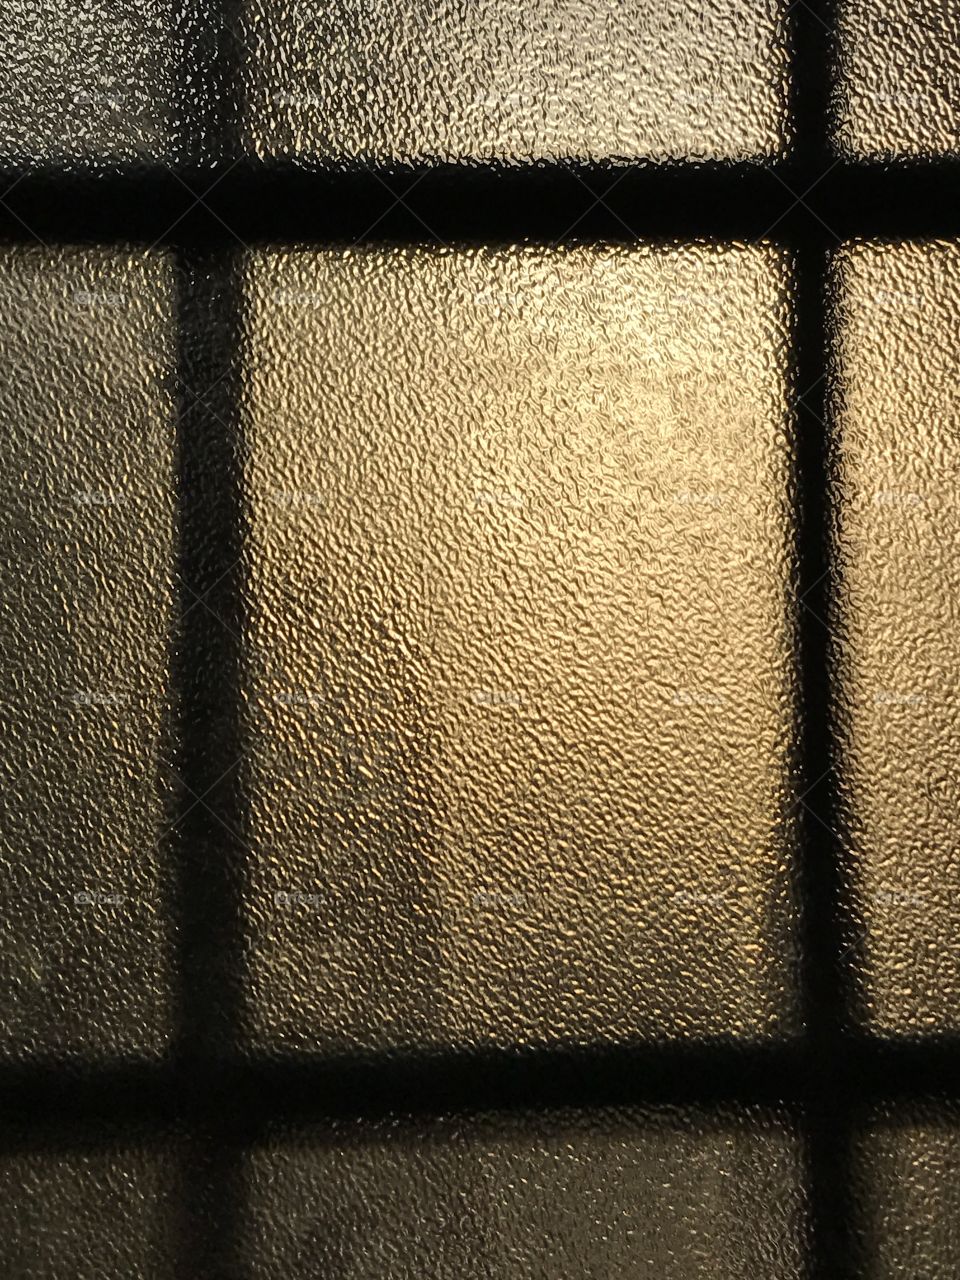 Sunset and door glass